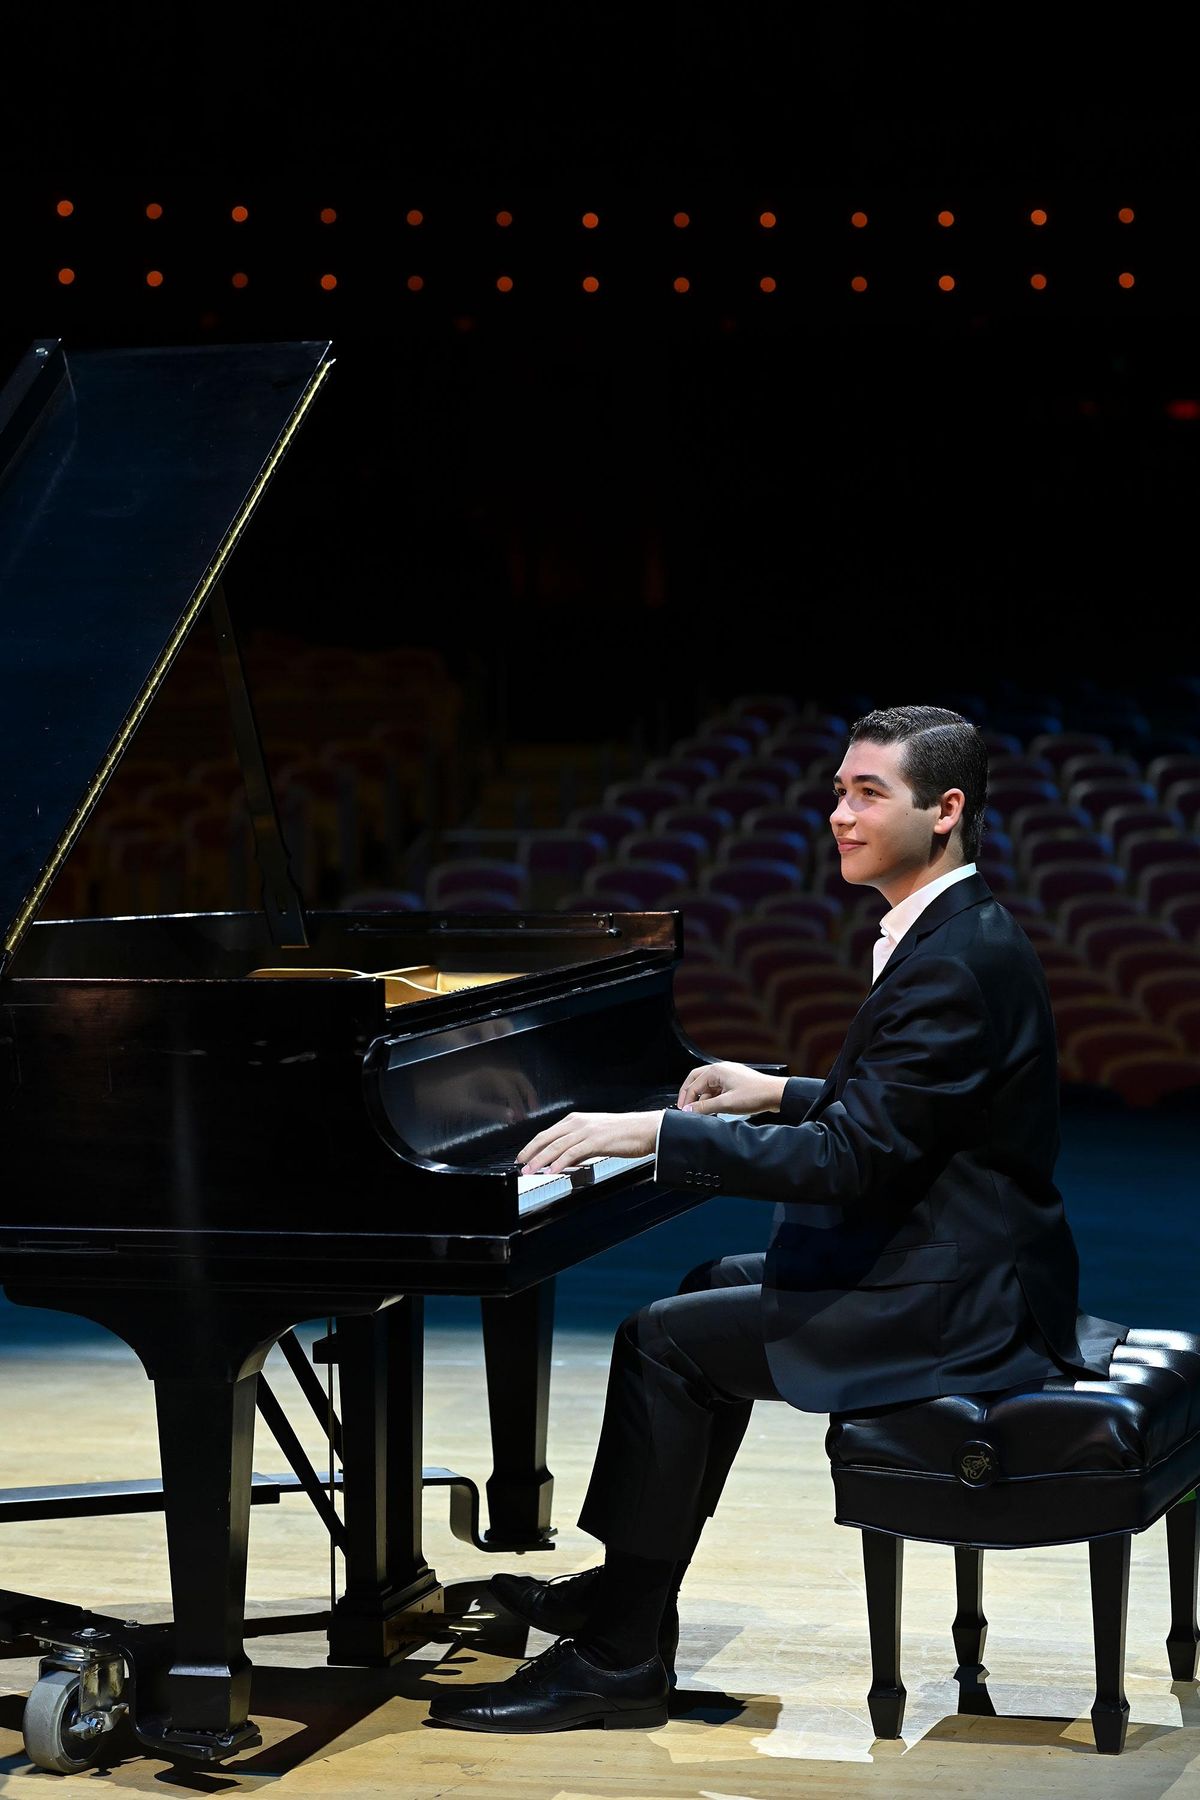 Jazz Piano at Miami Beach: American pianist Brandon Goldberg